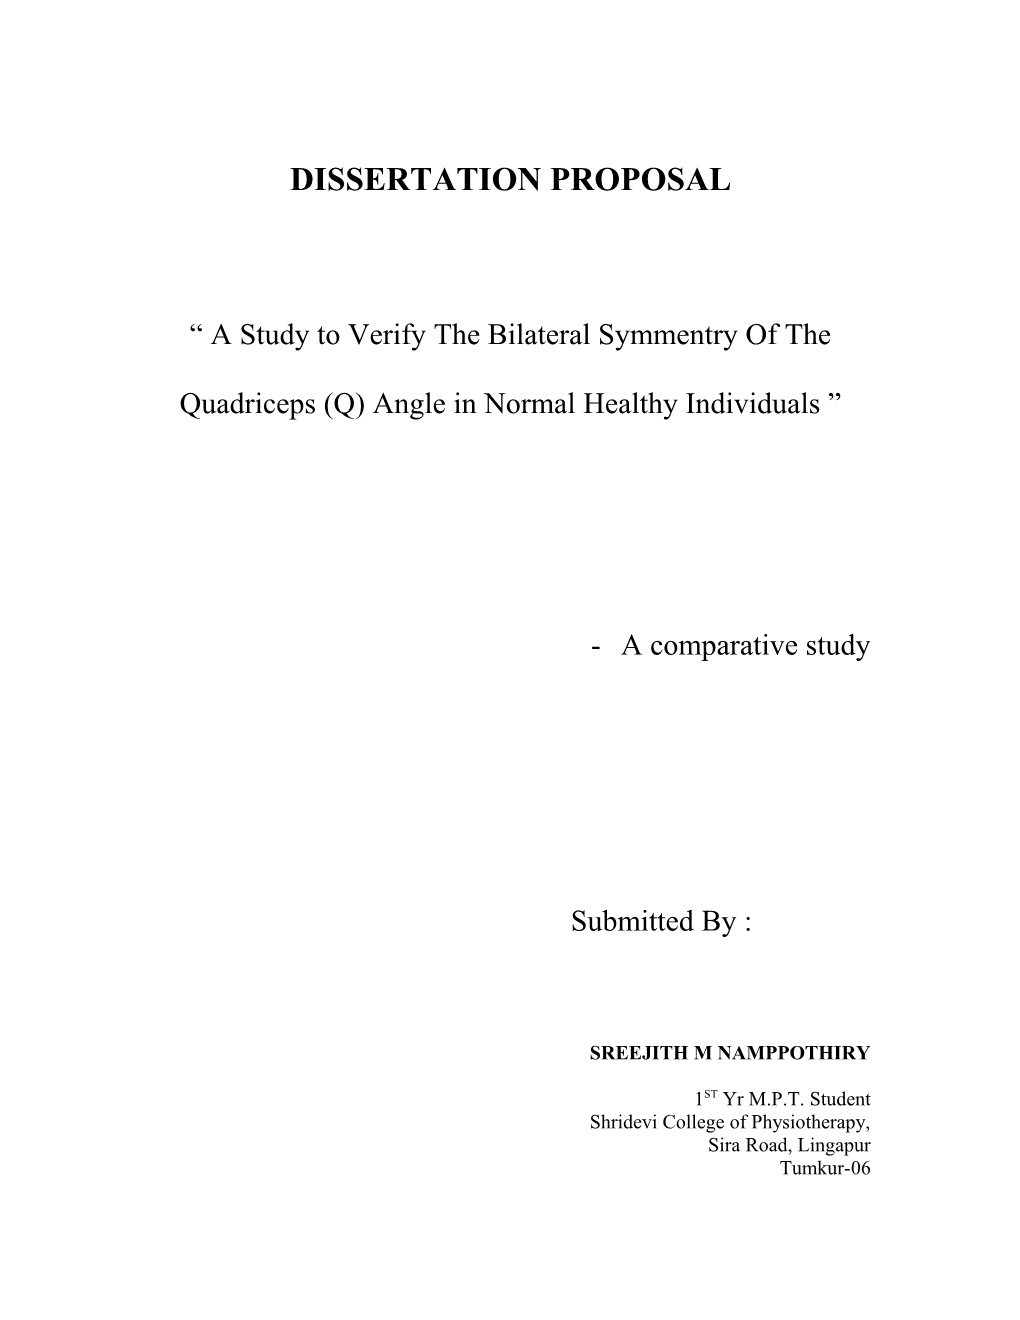 Dissertation Proposal s1